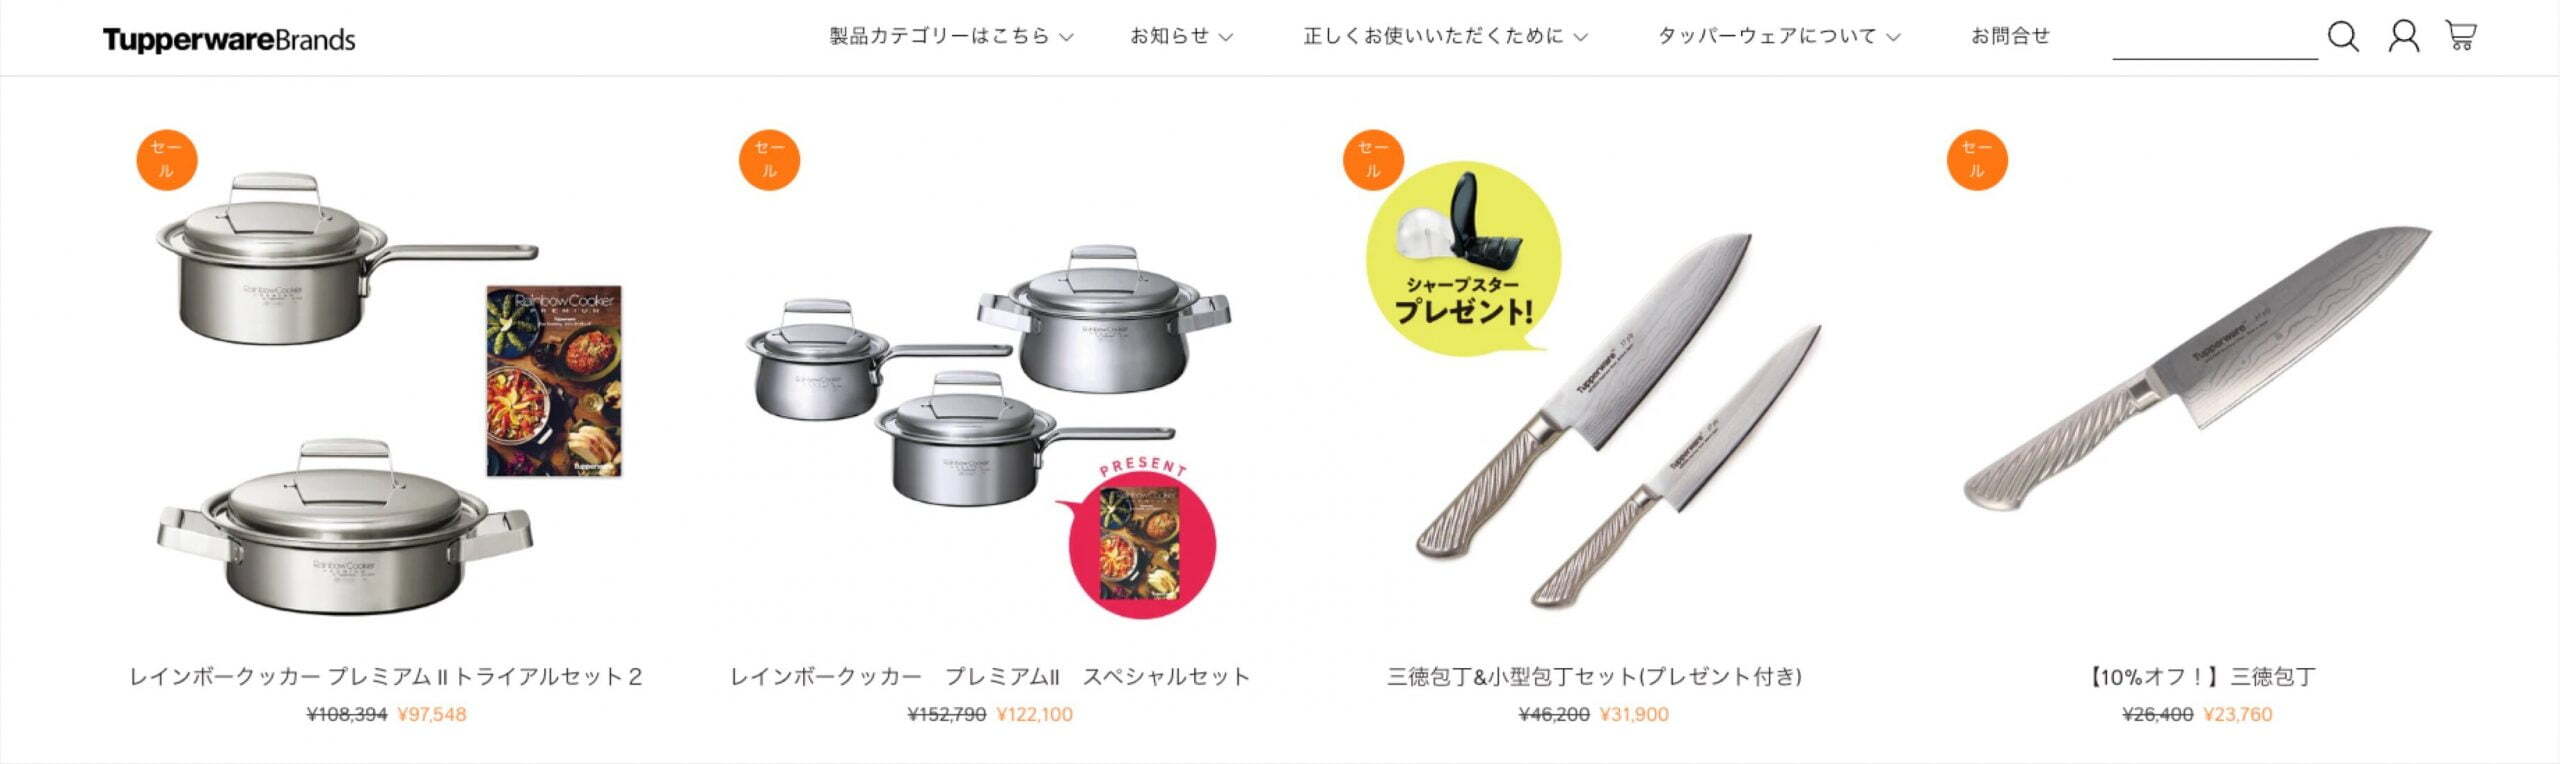 Tupperware Brands Japan Shopify Store